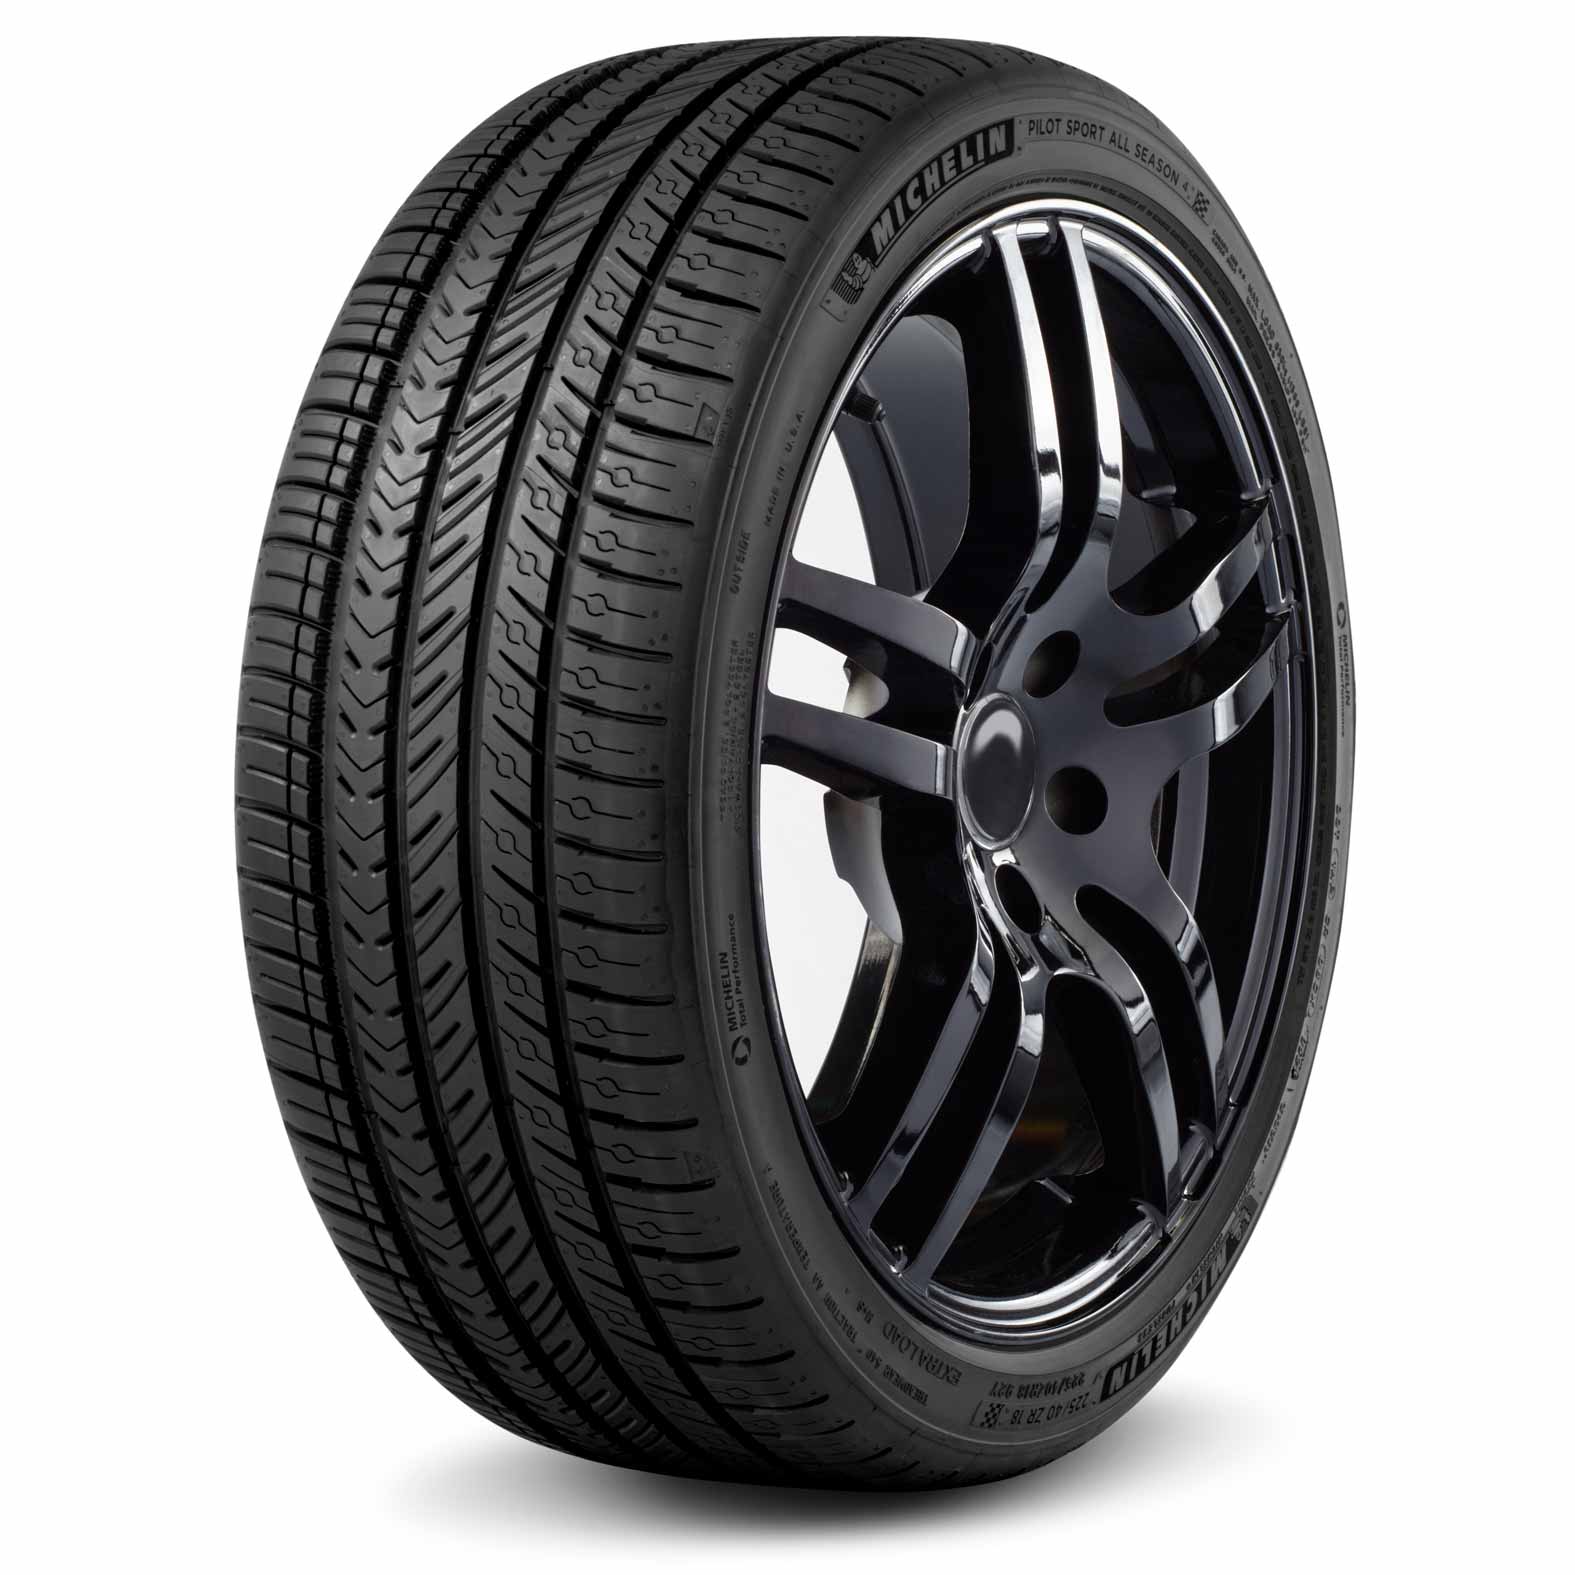 Michelin Pilot Sport AS 4 for Performance | Kal Tire